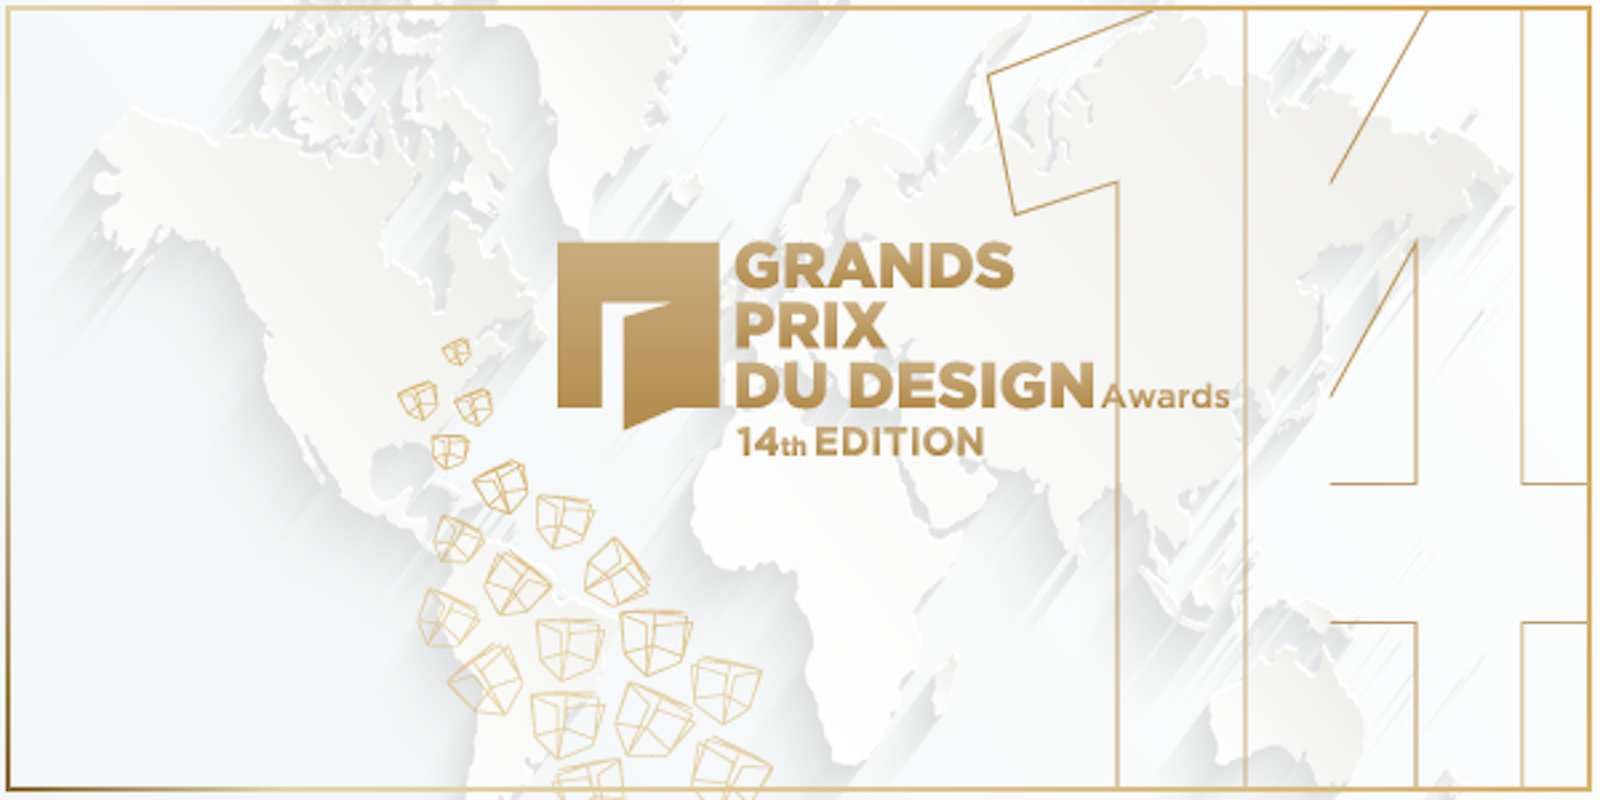 Archisearch GRANDS PRIX DU DESIGN Awards: Benefits